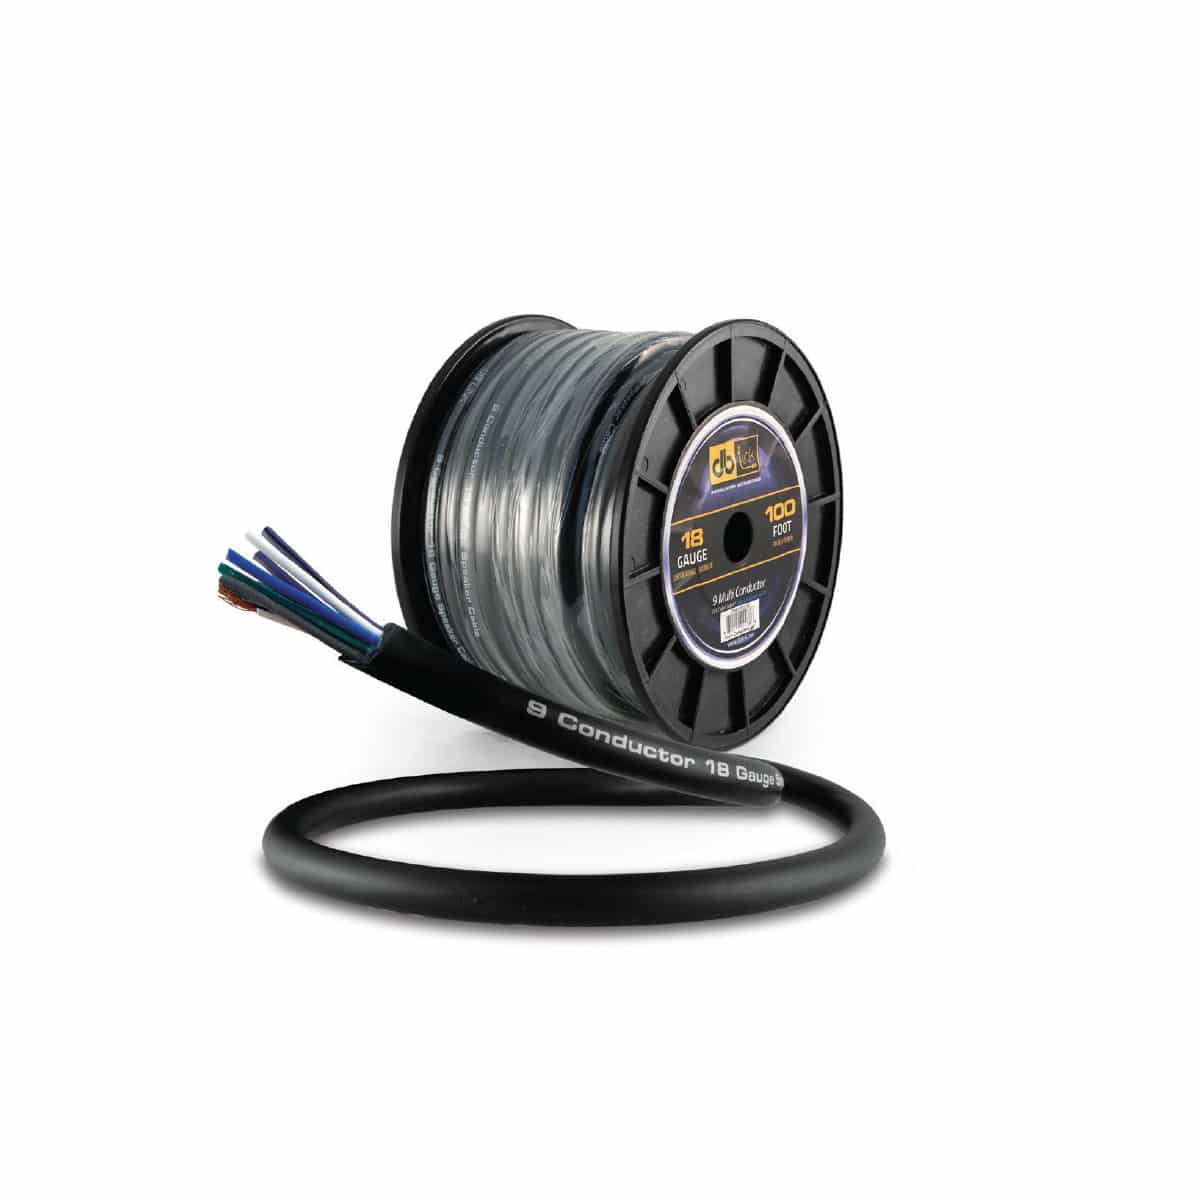 DB Link 9 Multi Conductor Speaker Wire W/Remote Trigger, 18 Gauge 100' (30.48 m)